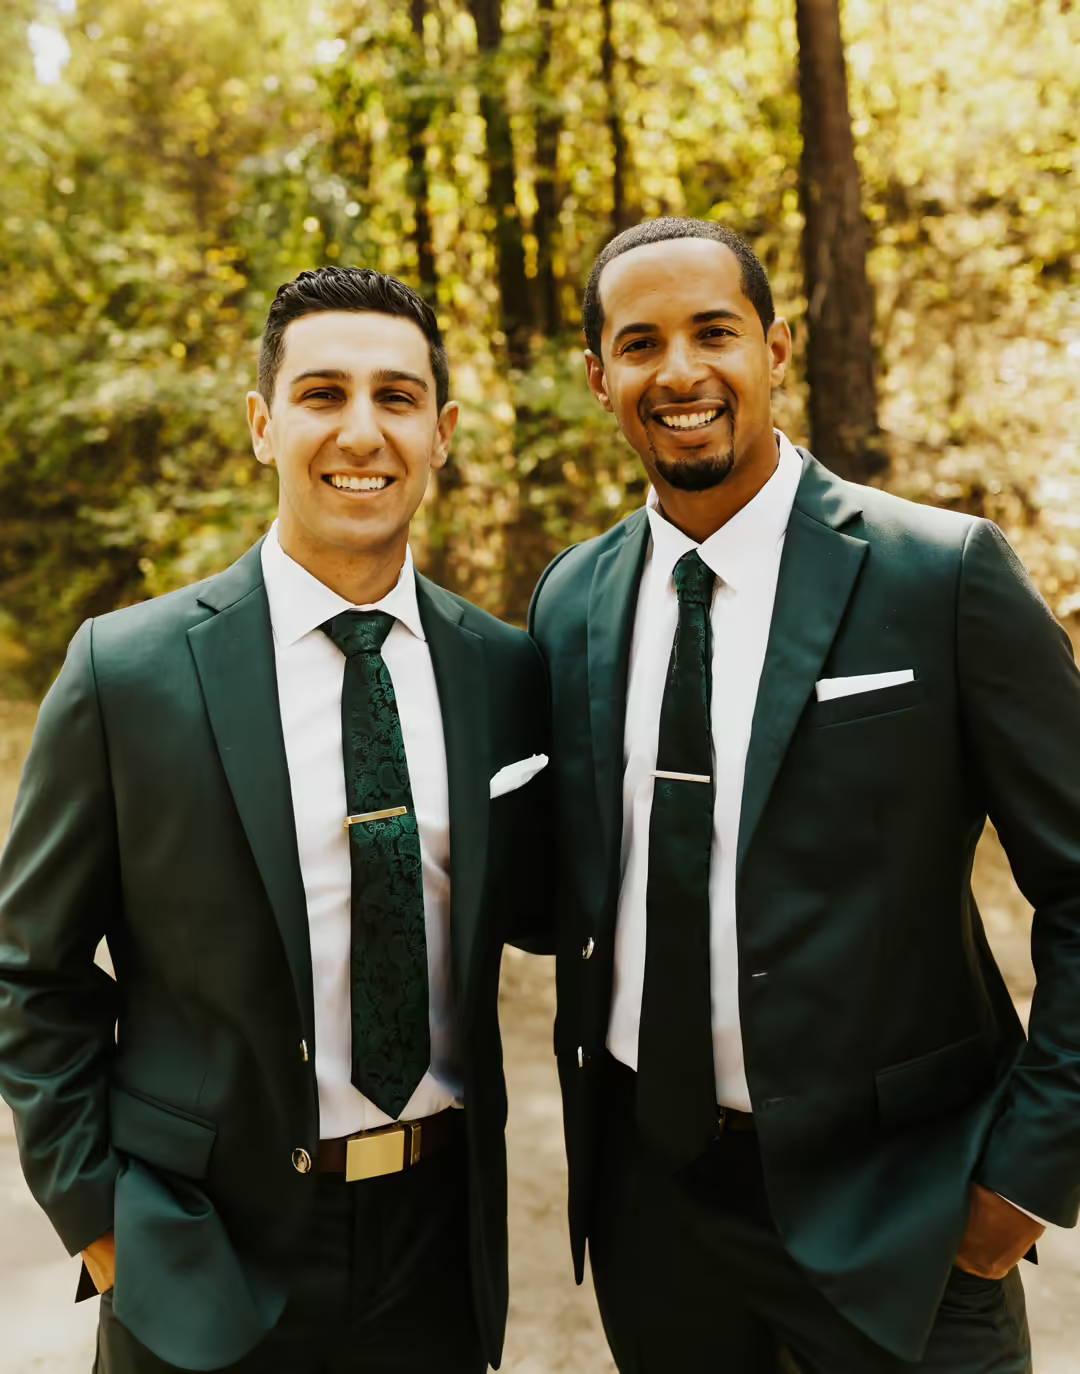 groomsmen posing in green suits